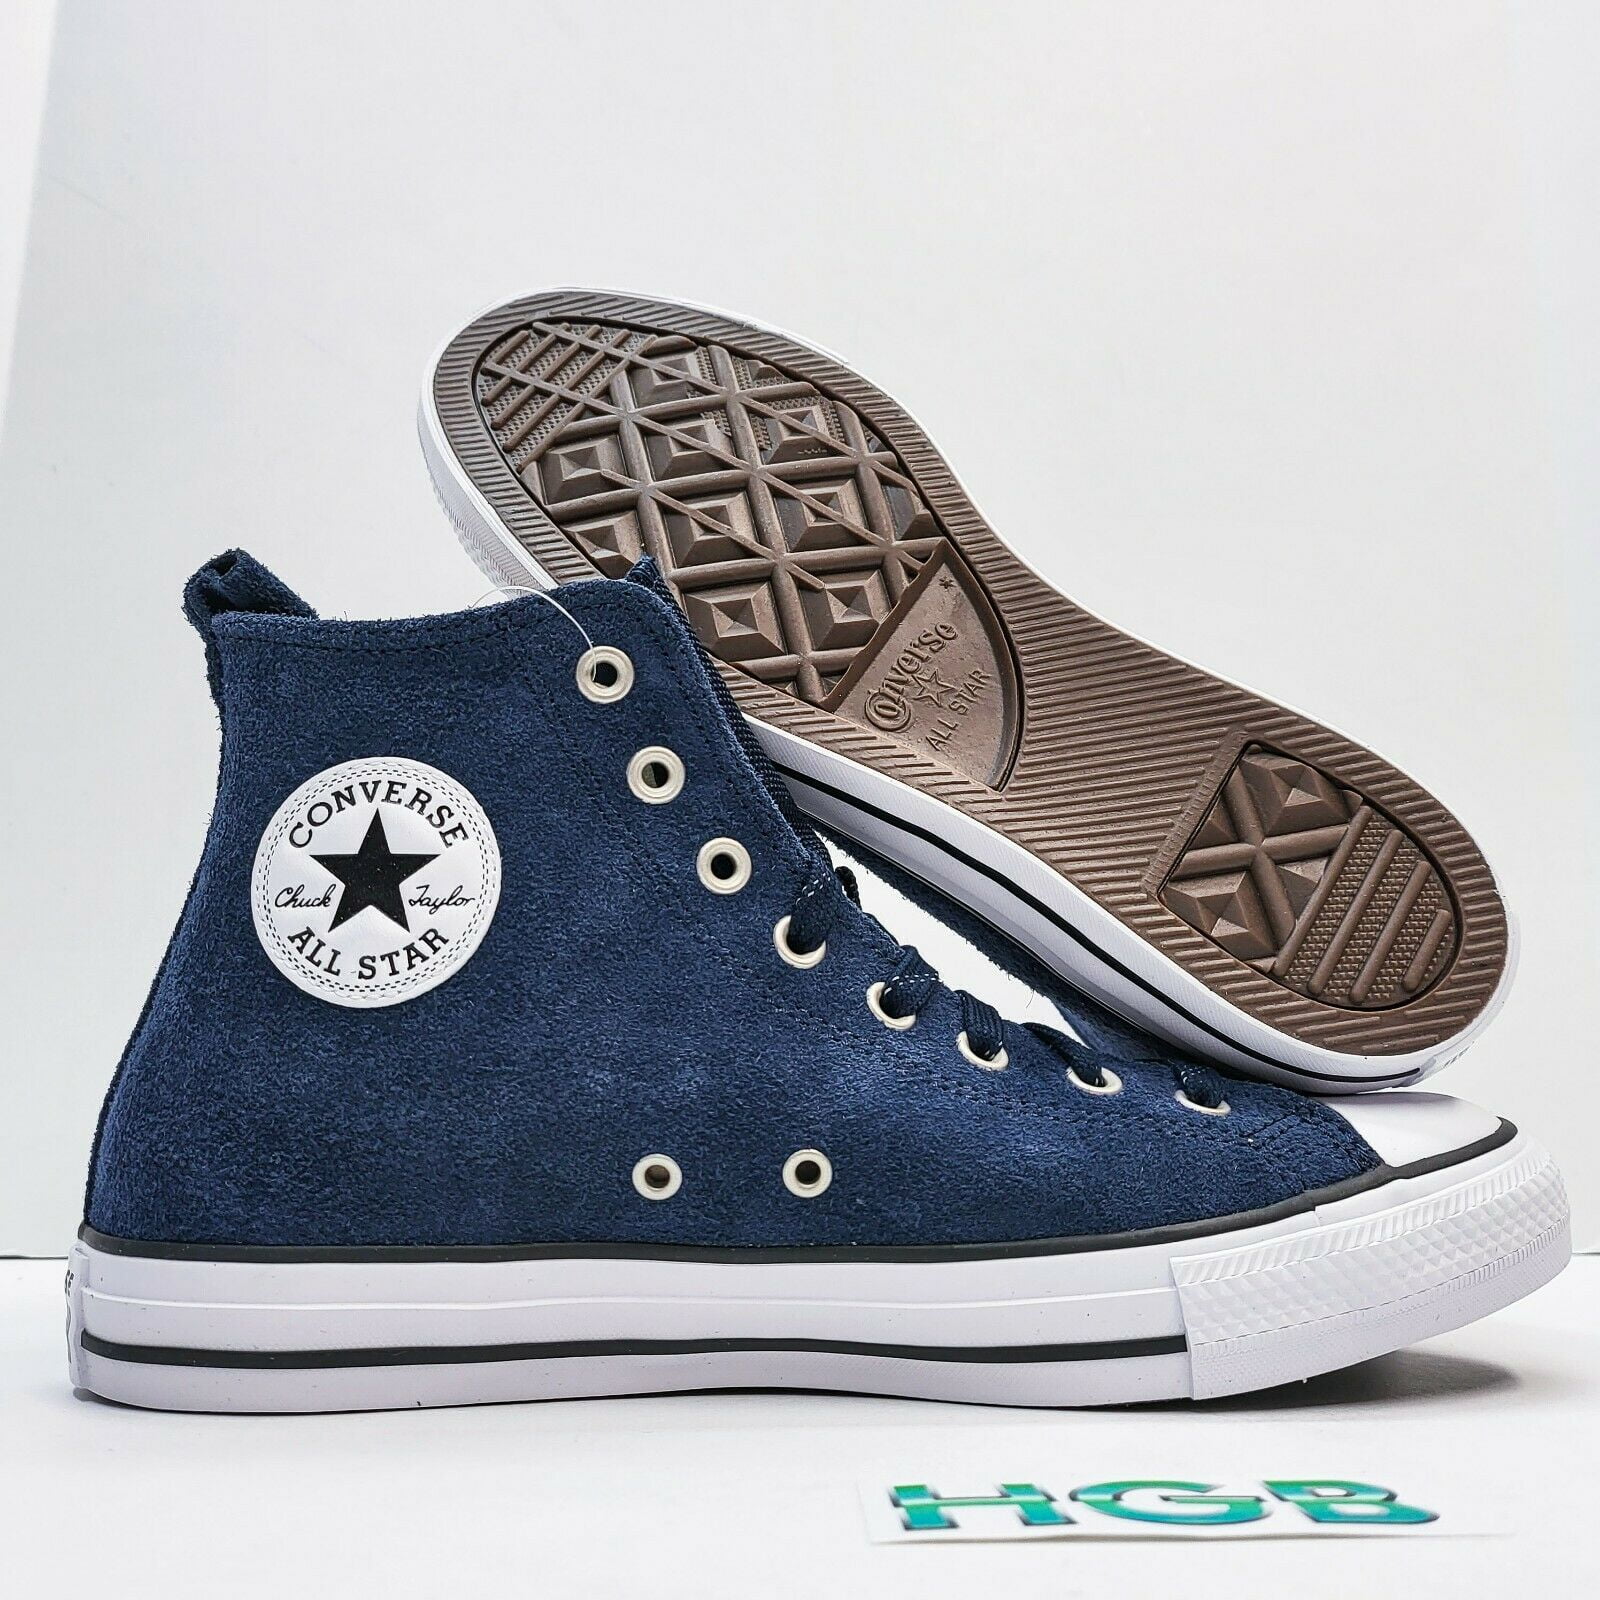 Converse Taylor All Star Hi Men's Blue Suede Limited Sneaker 170023C Walmart.com